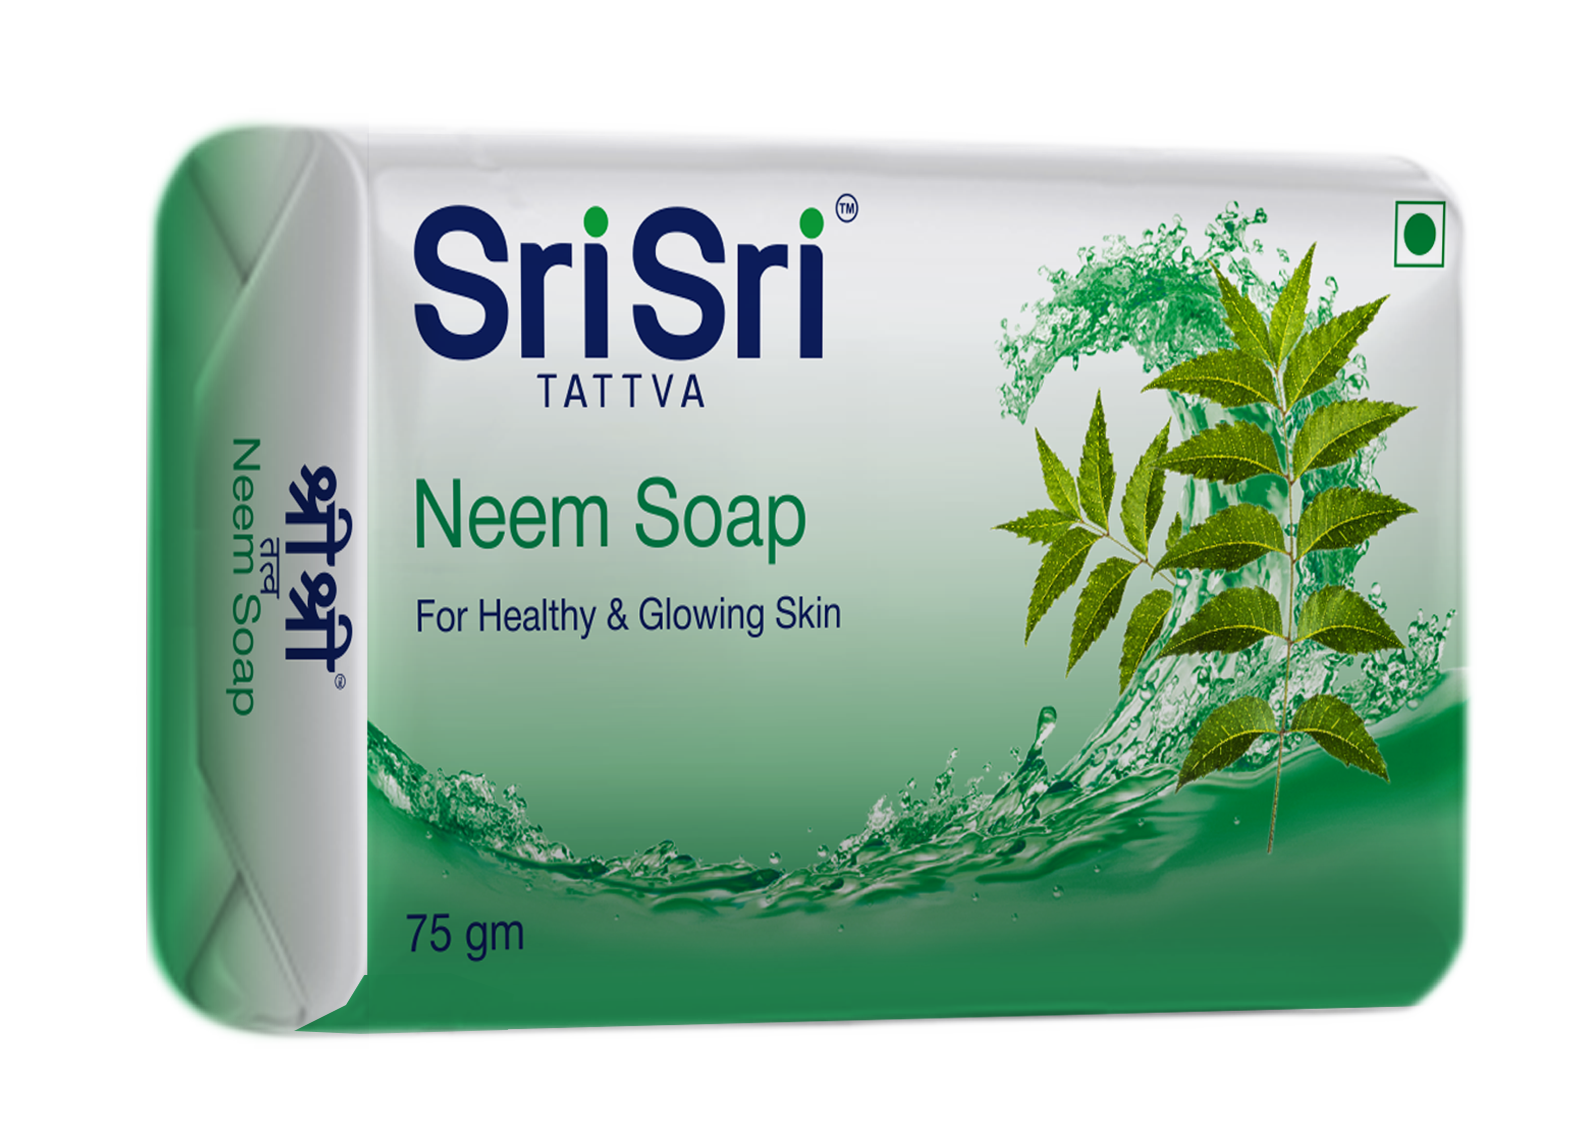 Buy Sri Sri Tattva Neem Soap at Best Price Online